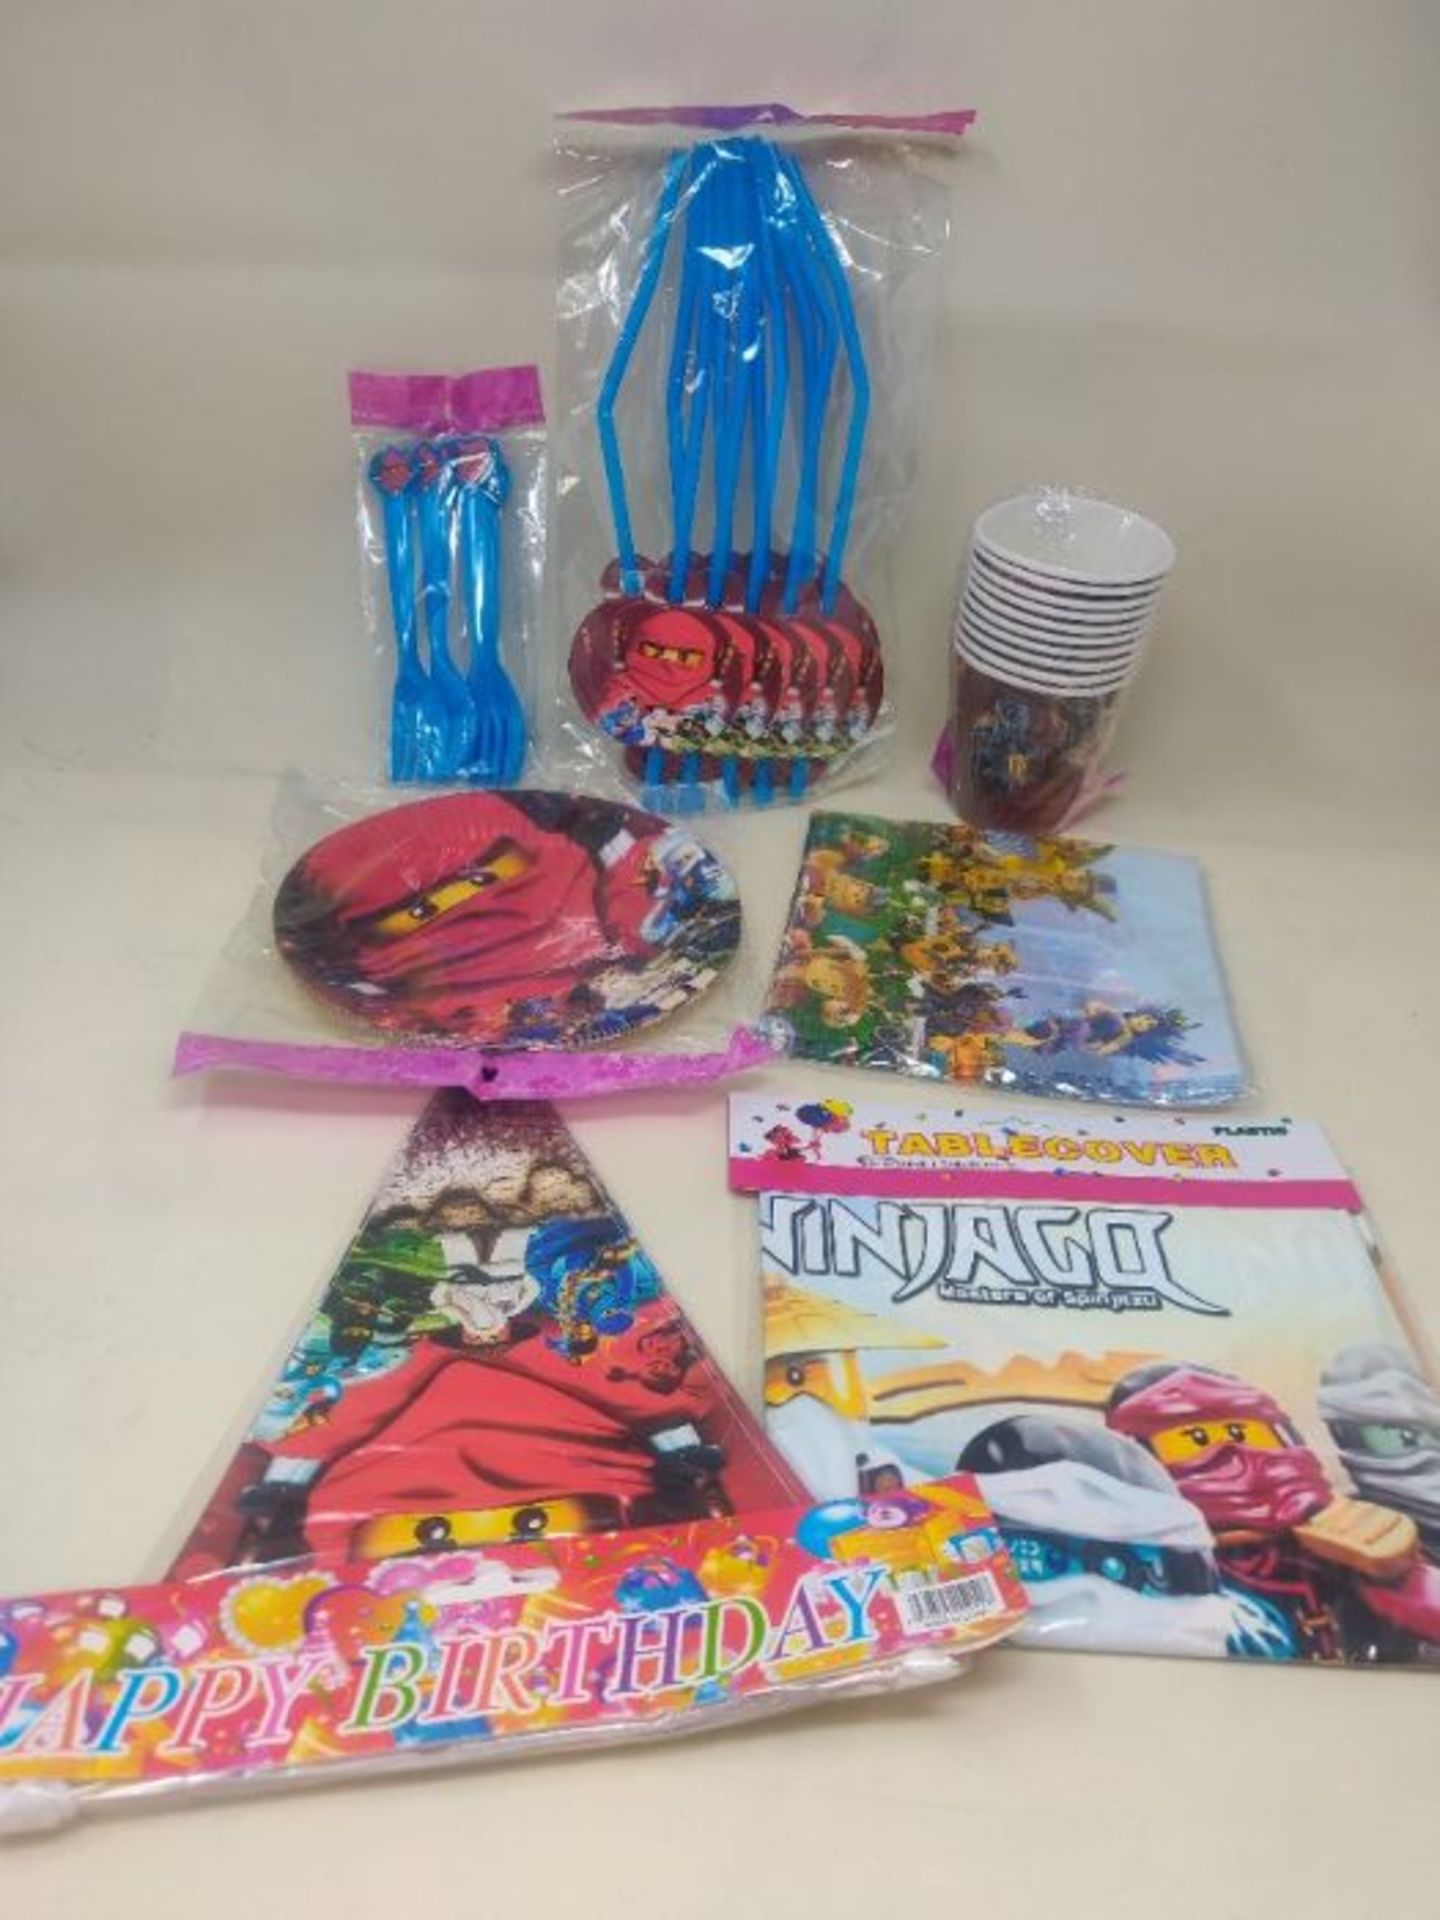 WENTS Birthday Party Set 62-Piece Ninja Birthday Party Supplies Plate Mug Napkins Birt - Image 2 of 2